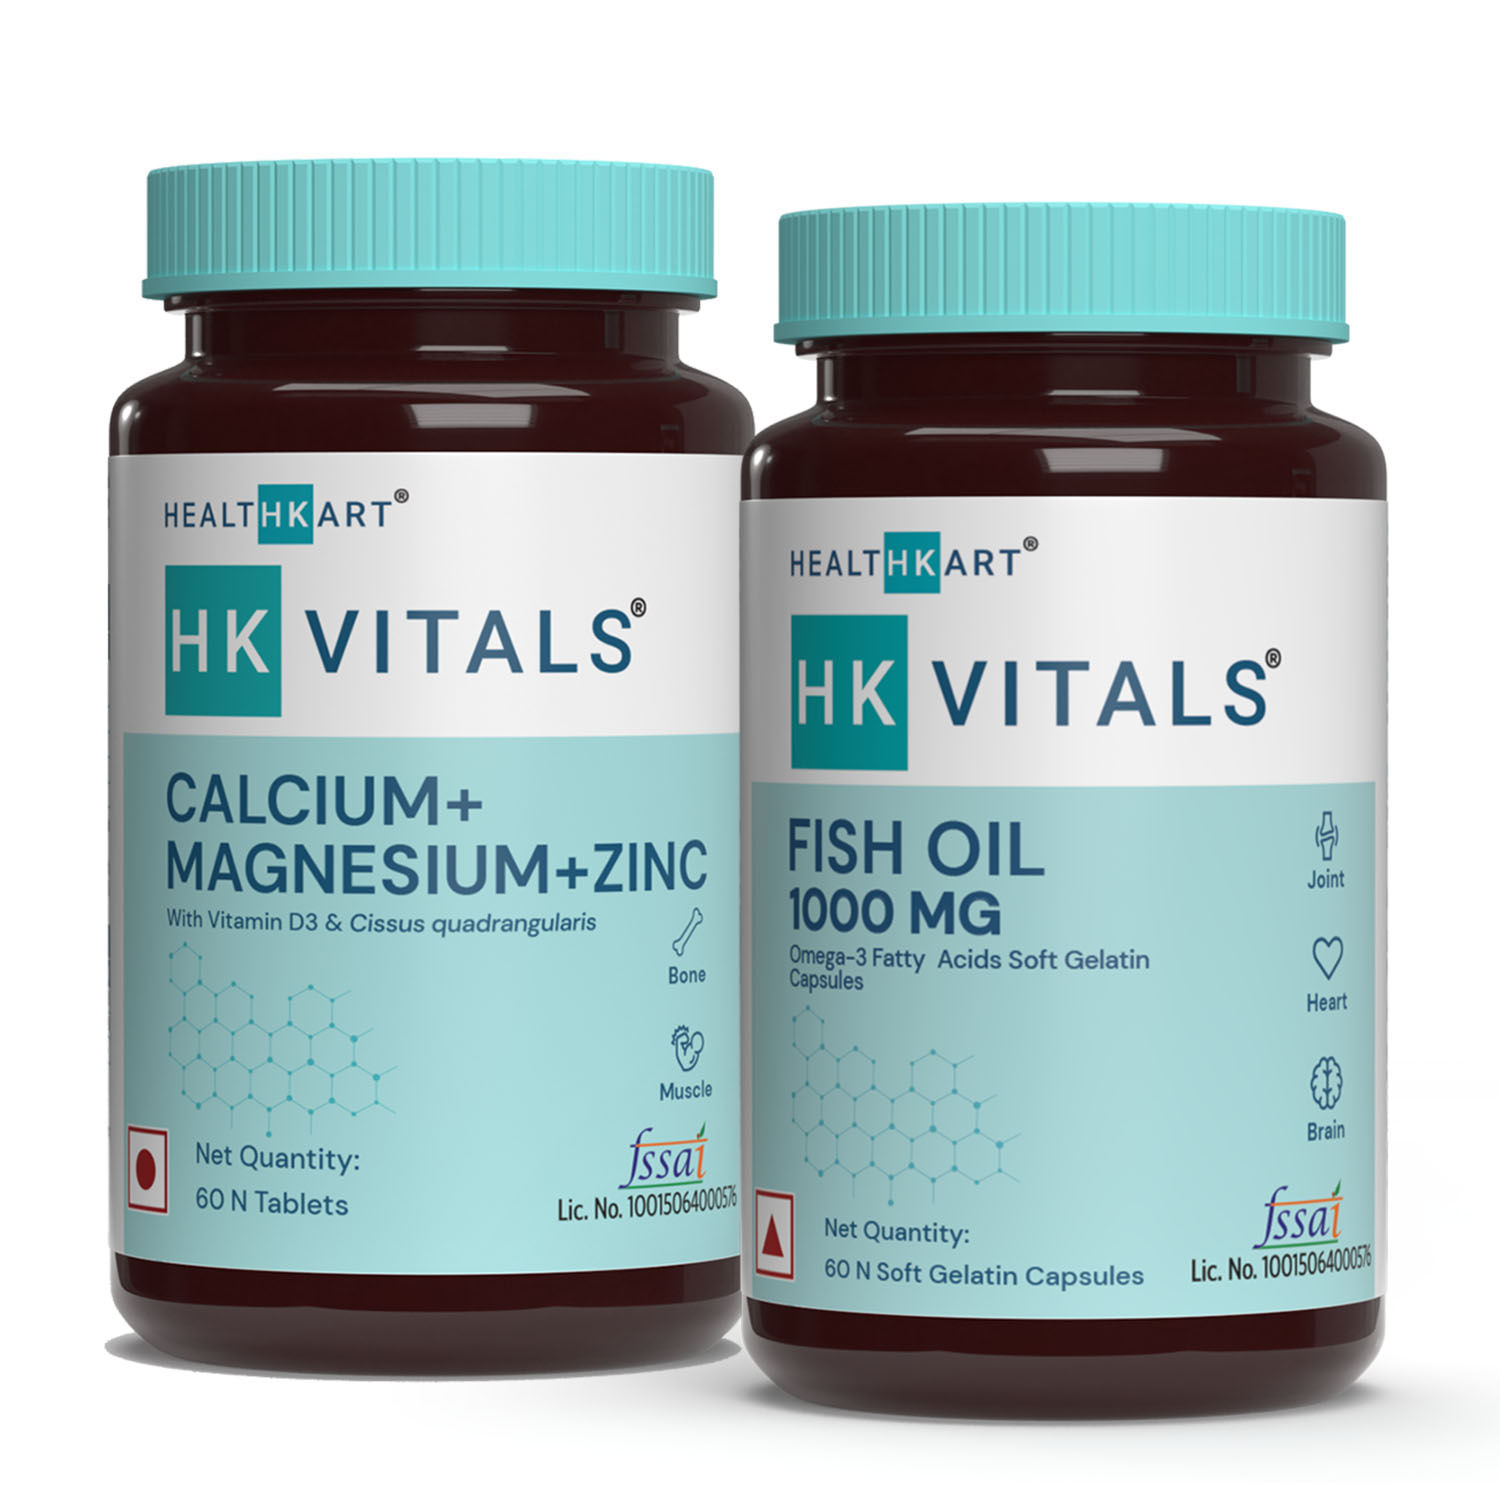 HealthKart HK Vitals Calcium, Magnesium, and Zinc with 1000 mg Omega 3 Fish Oil (Combo Pack)